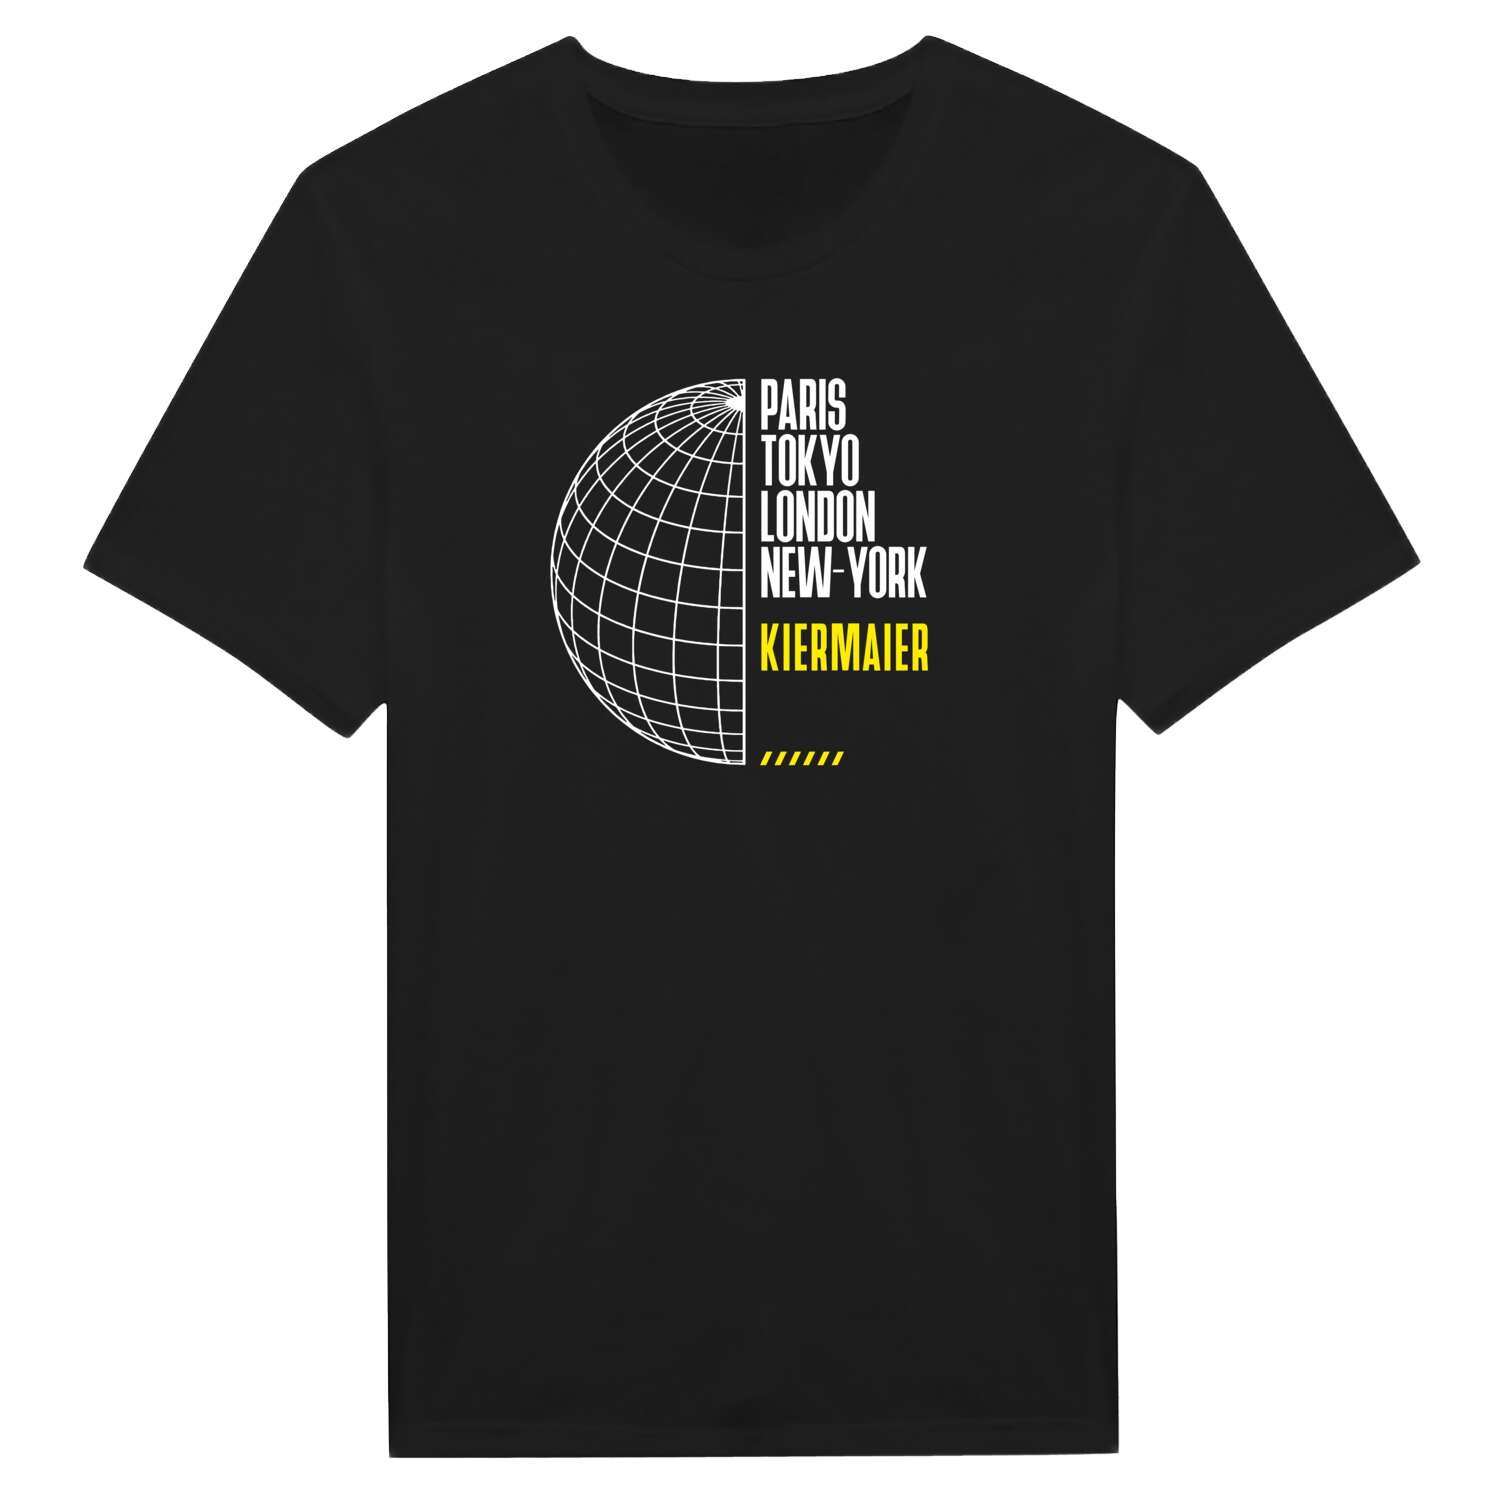 Kiermaier T-Shirt »Paris Tokyo London«